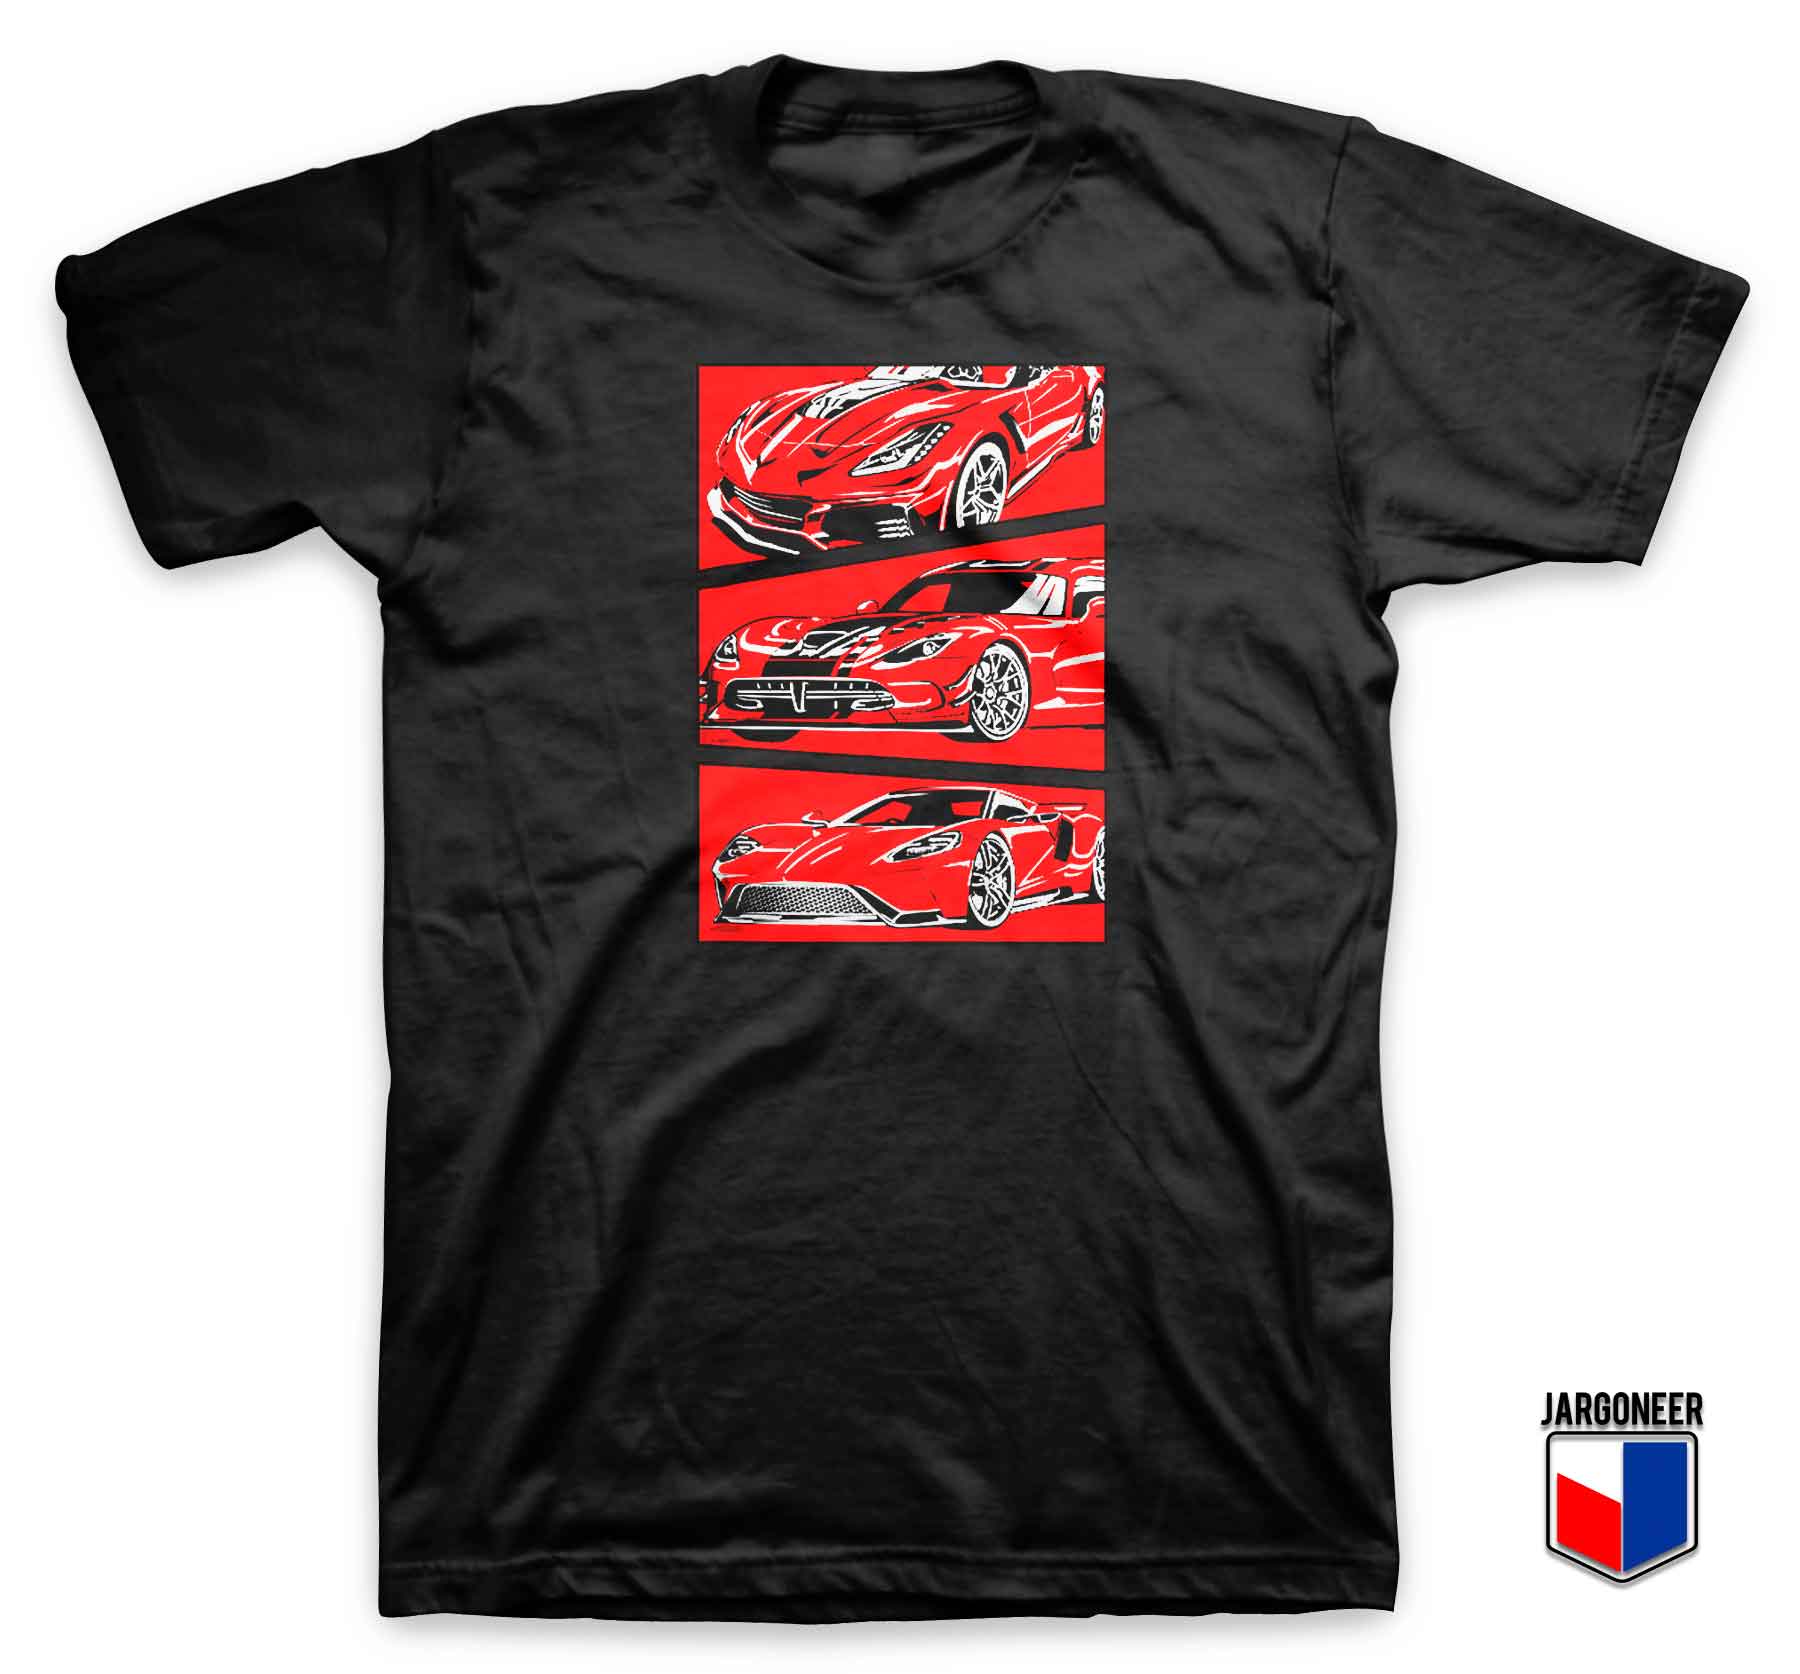 American Super Car T Shirt - Shop Unique Graphic Cool Shirt Designs